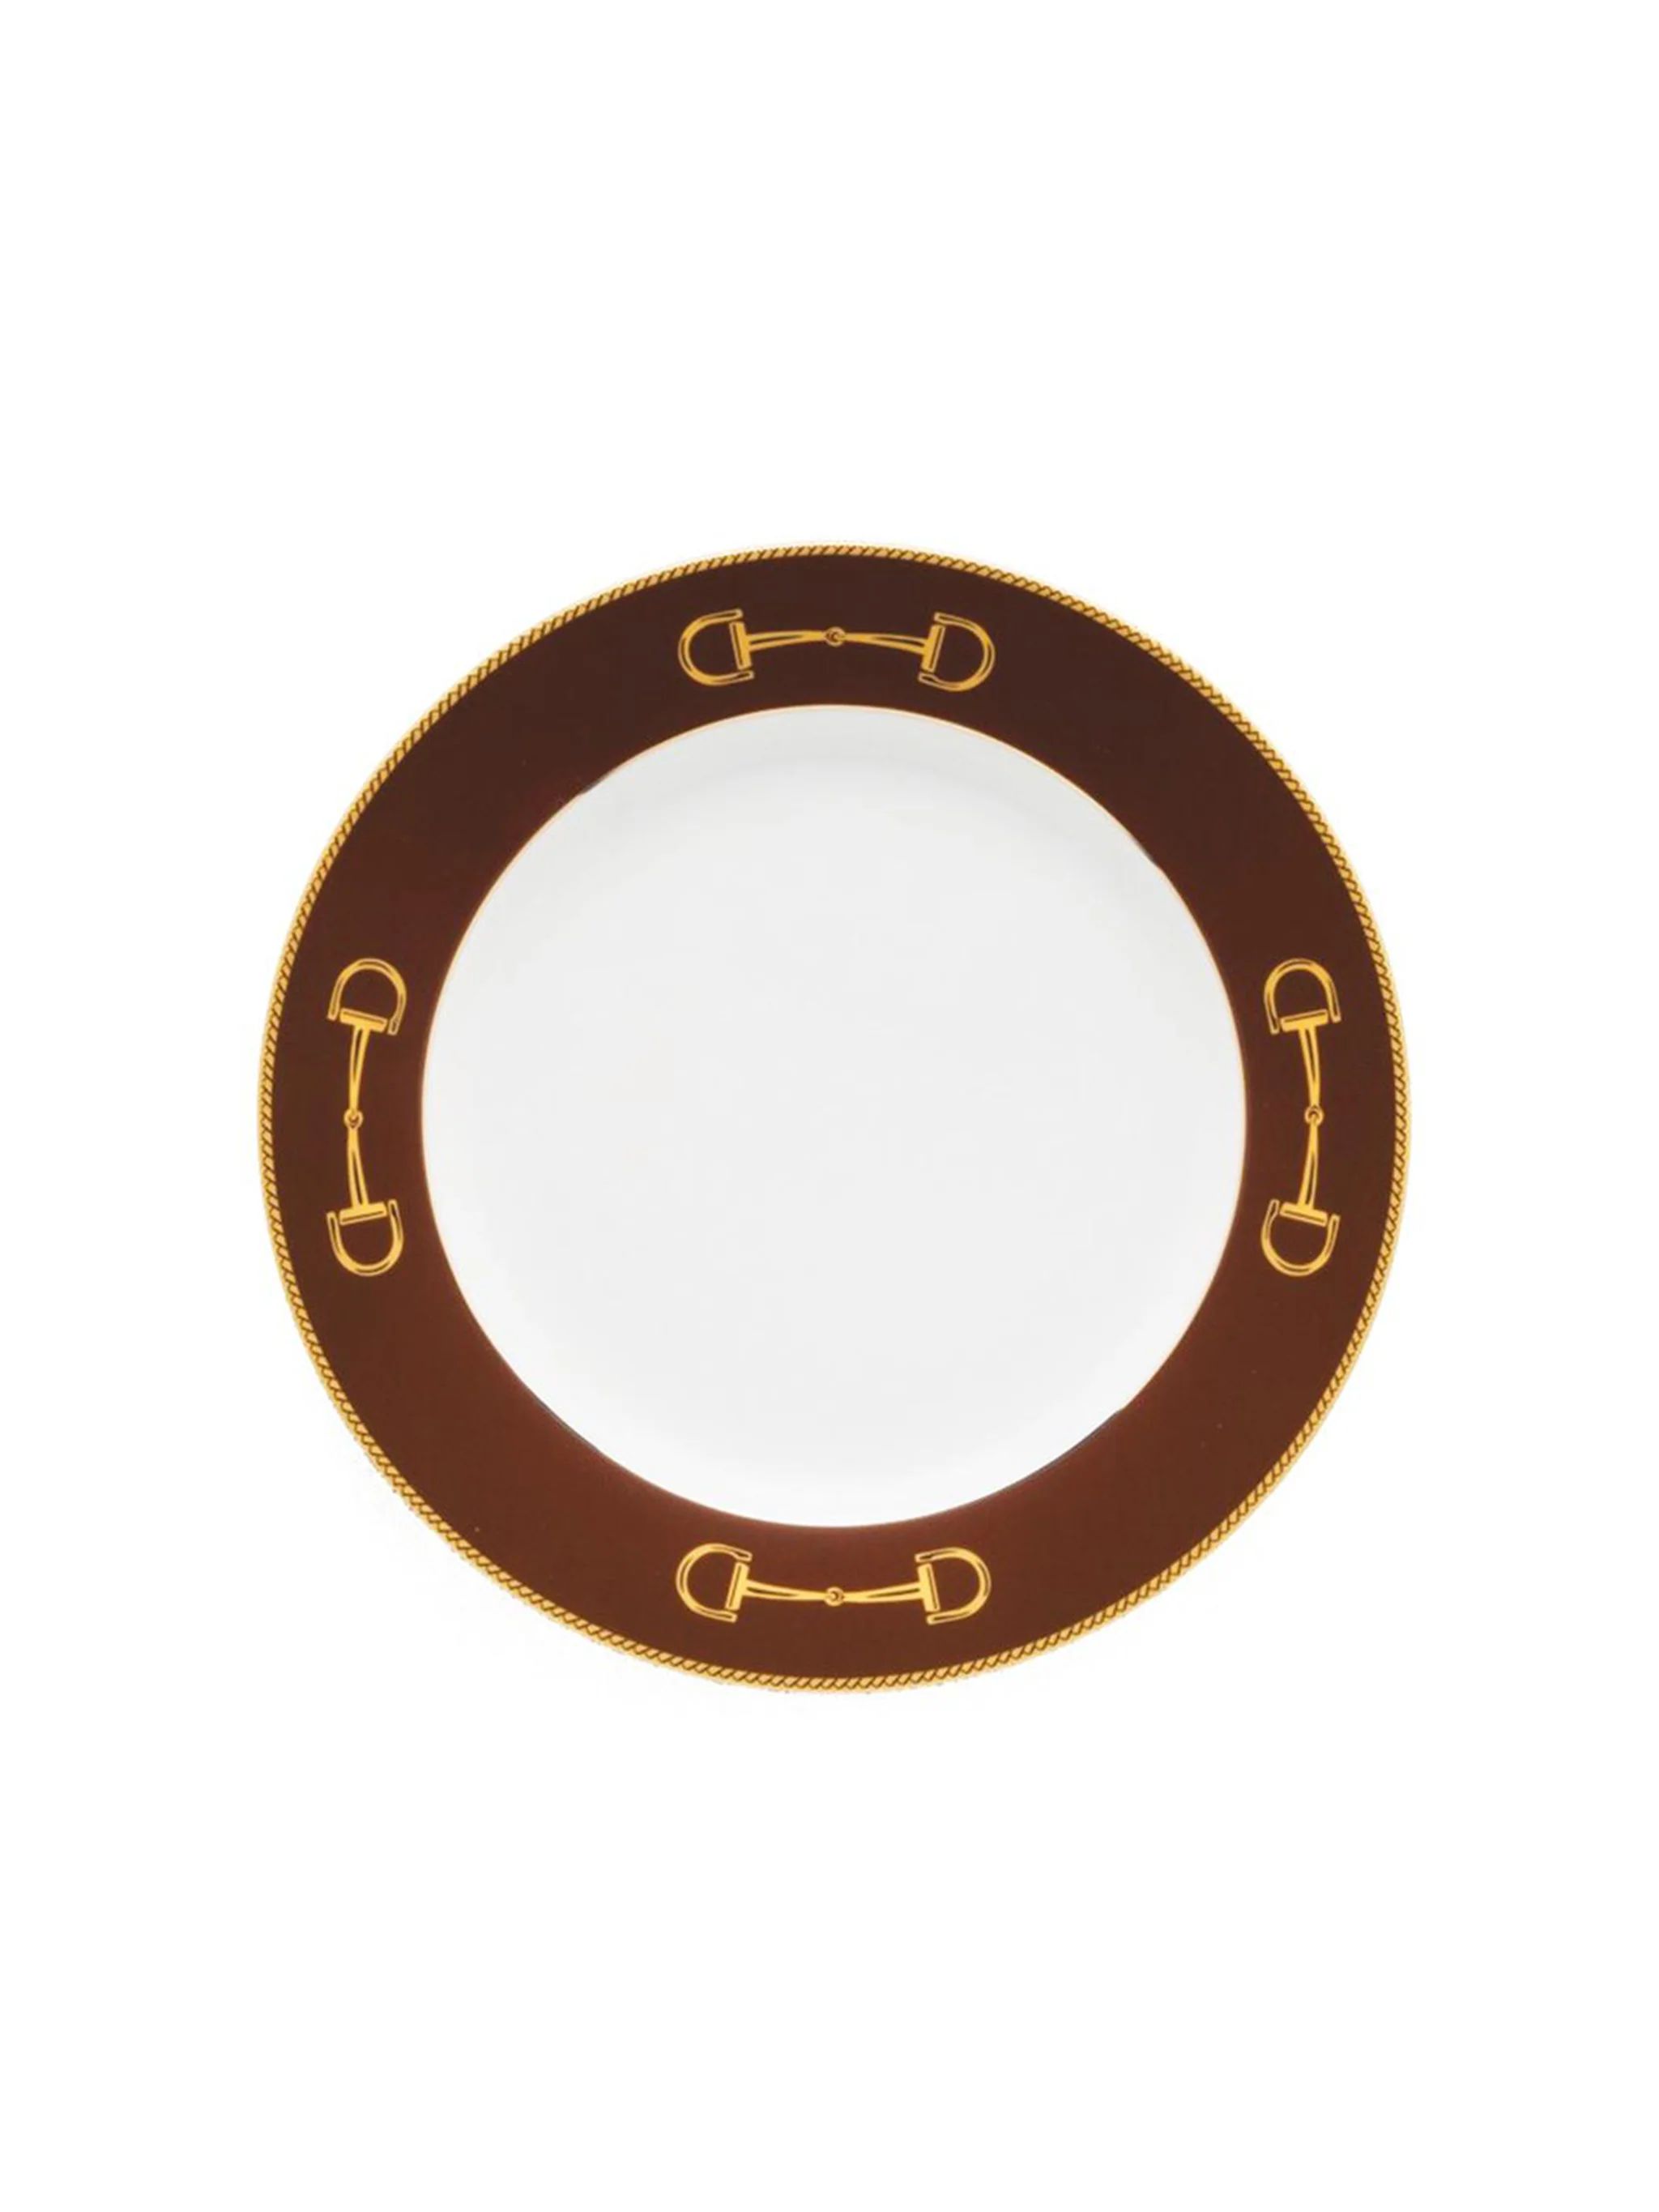 Julie Wear Cheval Chestnut Brown Dinner Plate | Weston Table